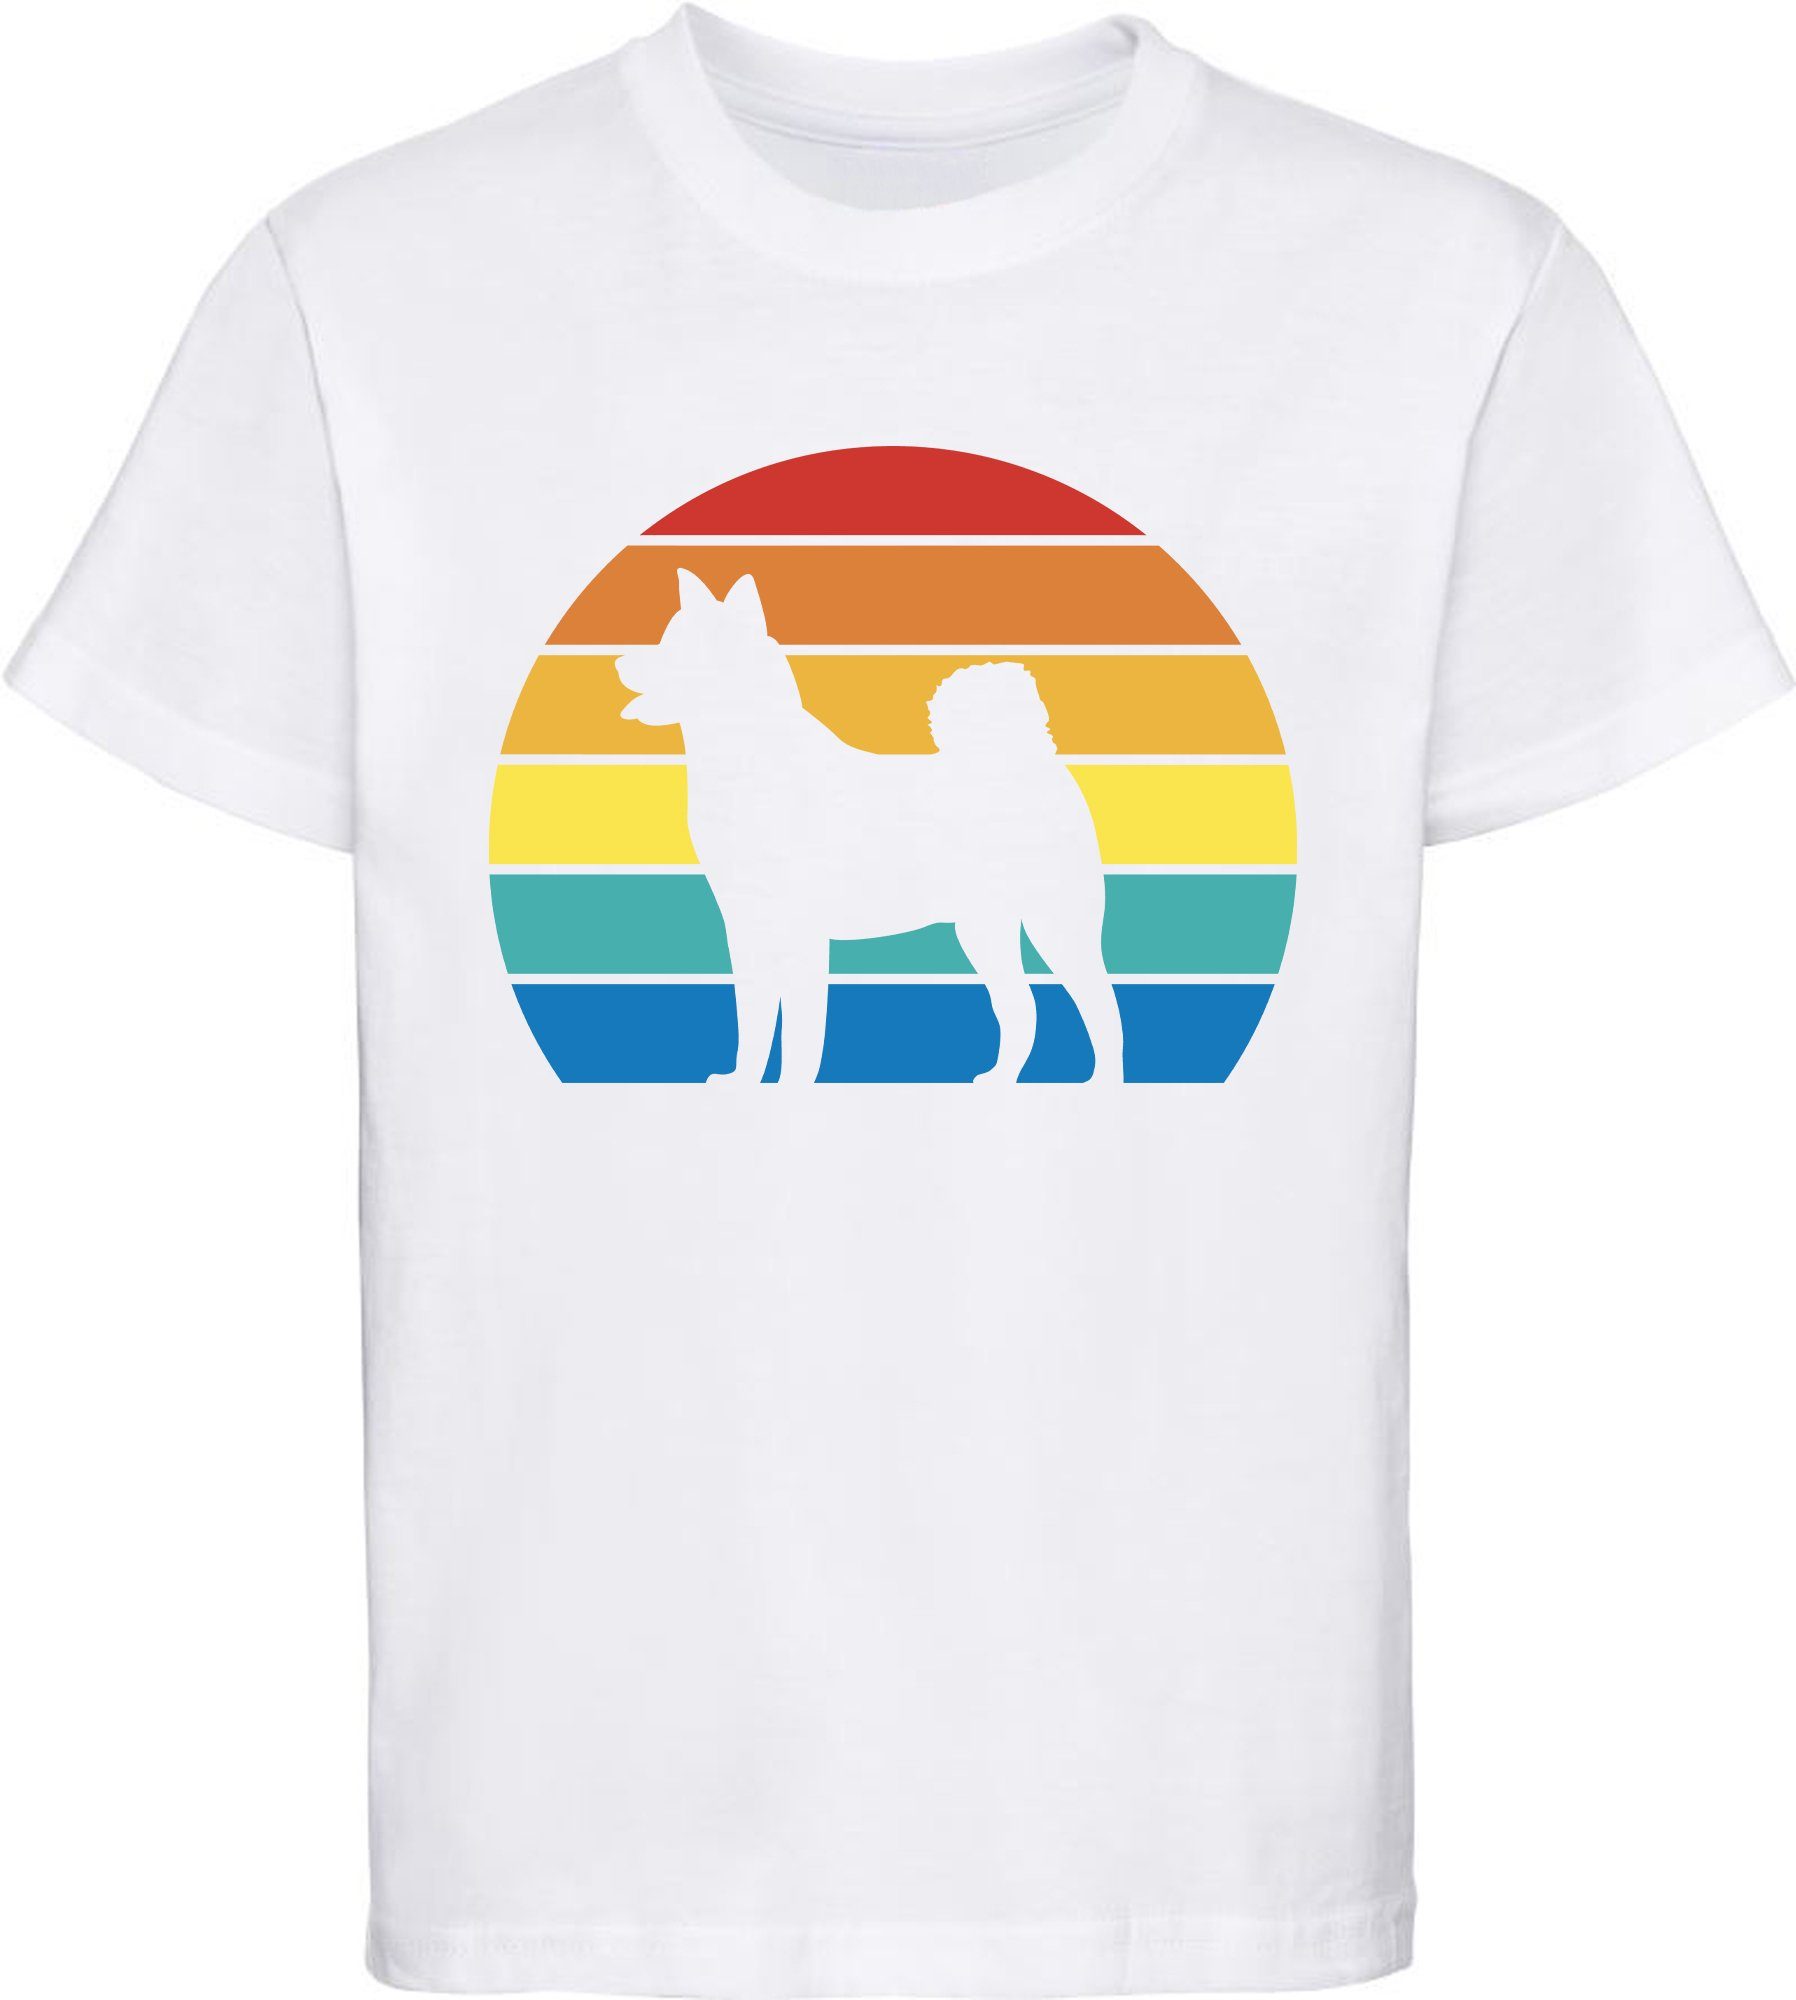 Print-Shirt Bild Aufdruck, i236 Retro bedruckt Baumwollshirt weiss mit T-Shirt Kinder - Hunde MyDesign24 Akita